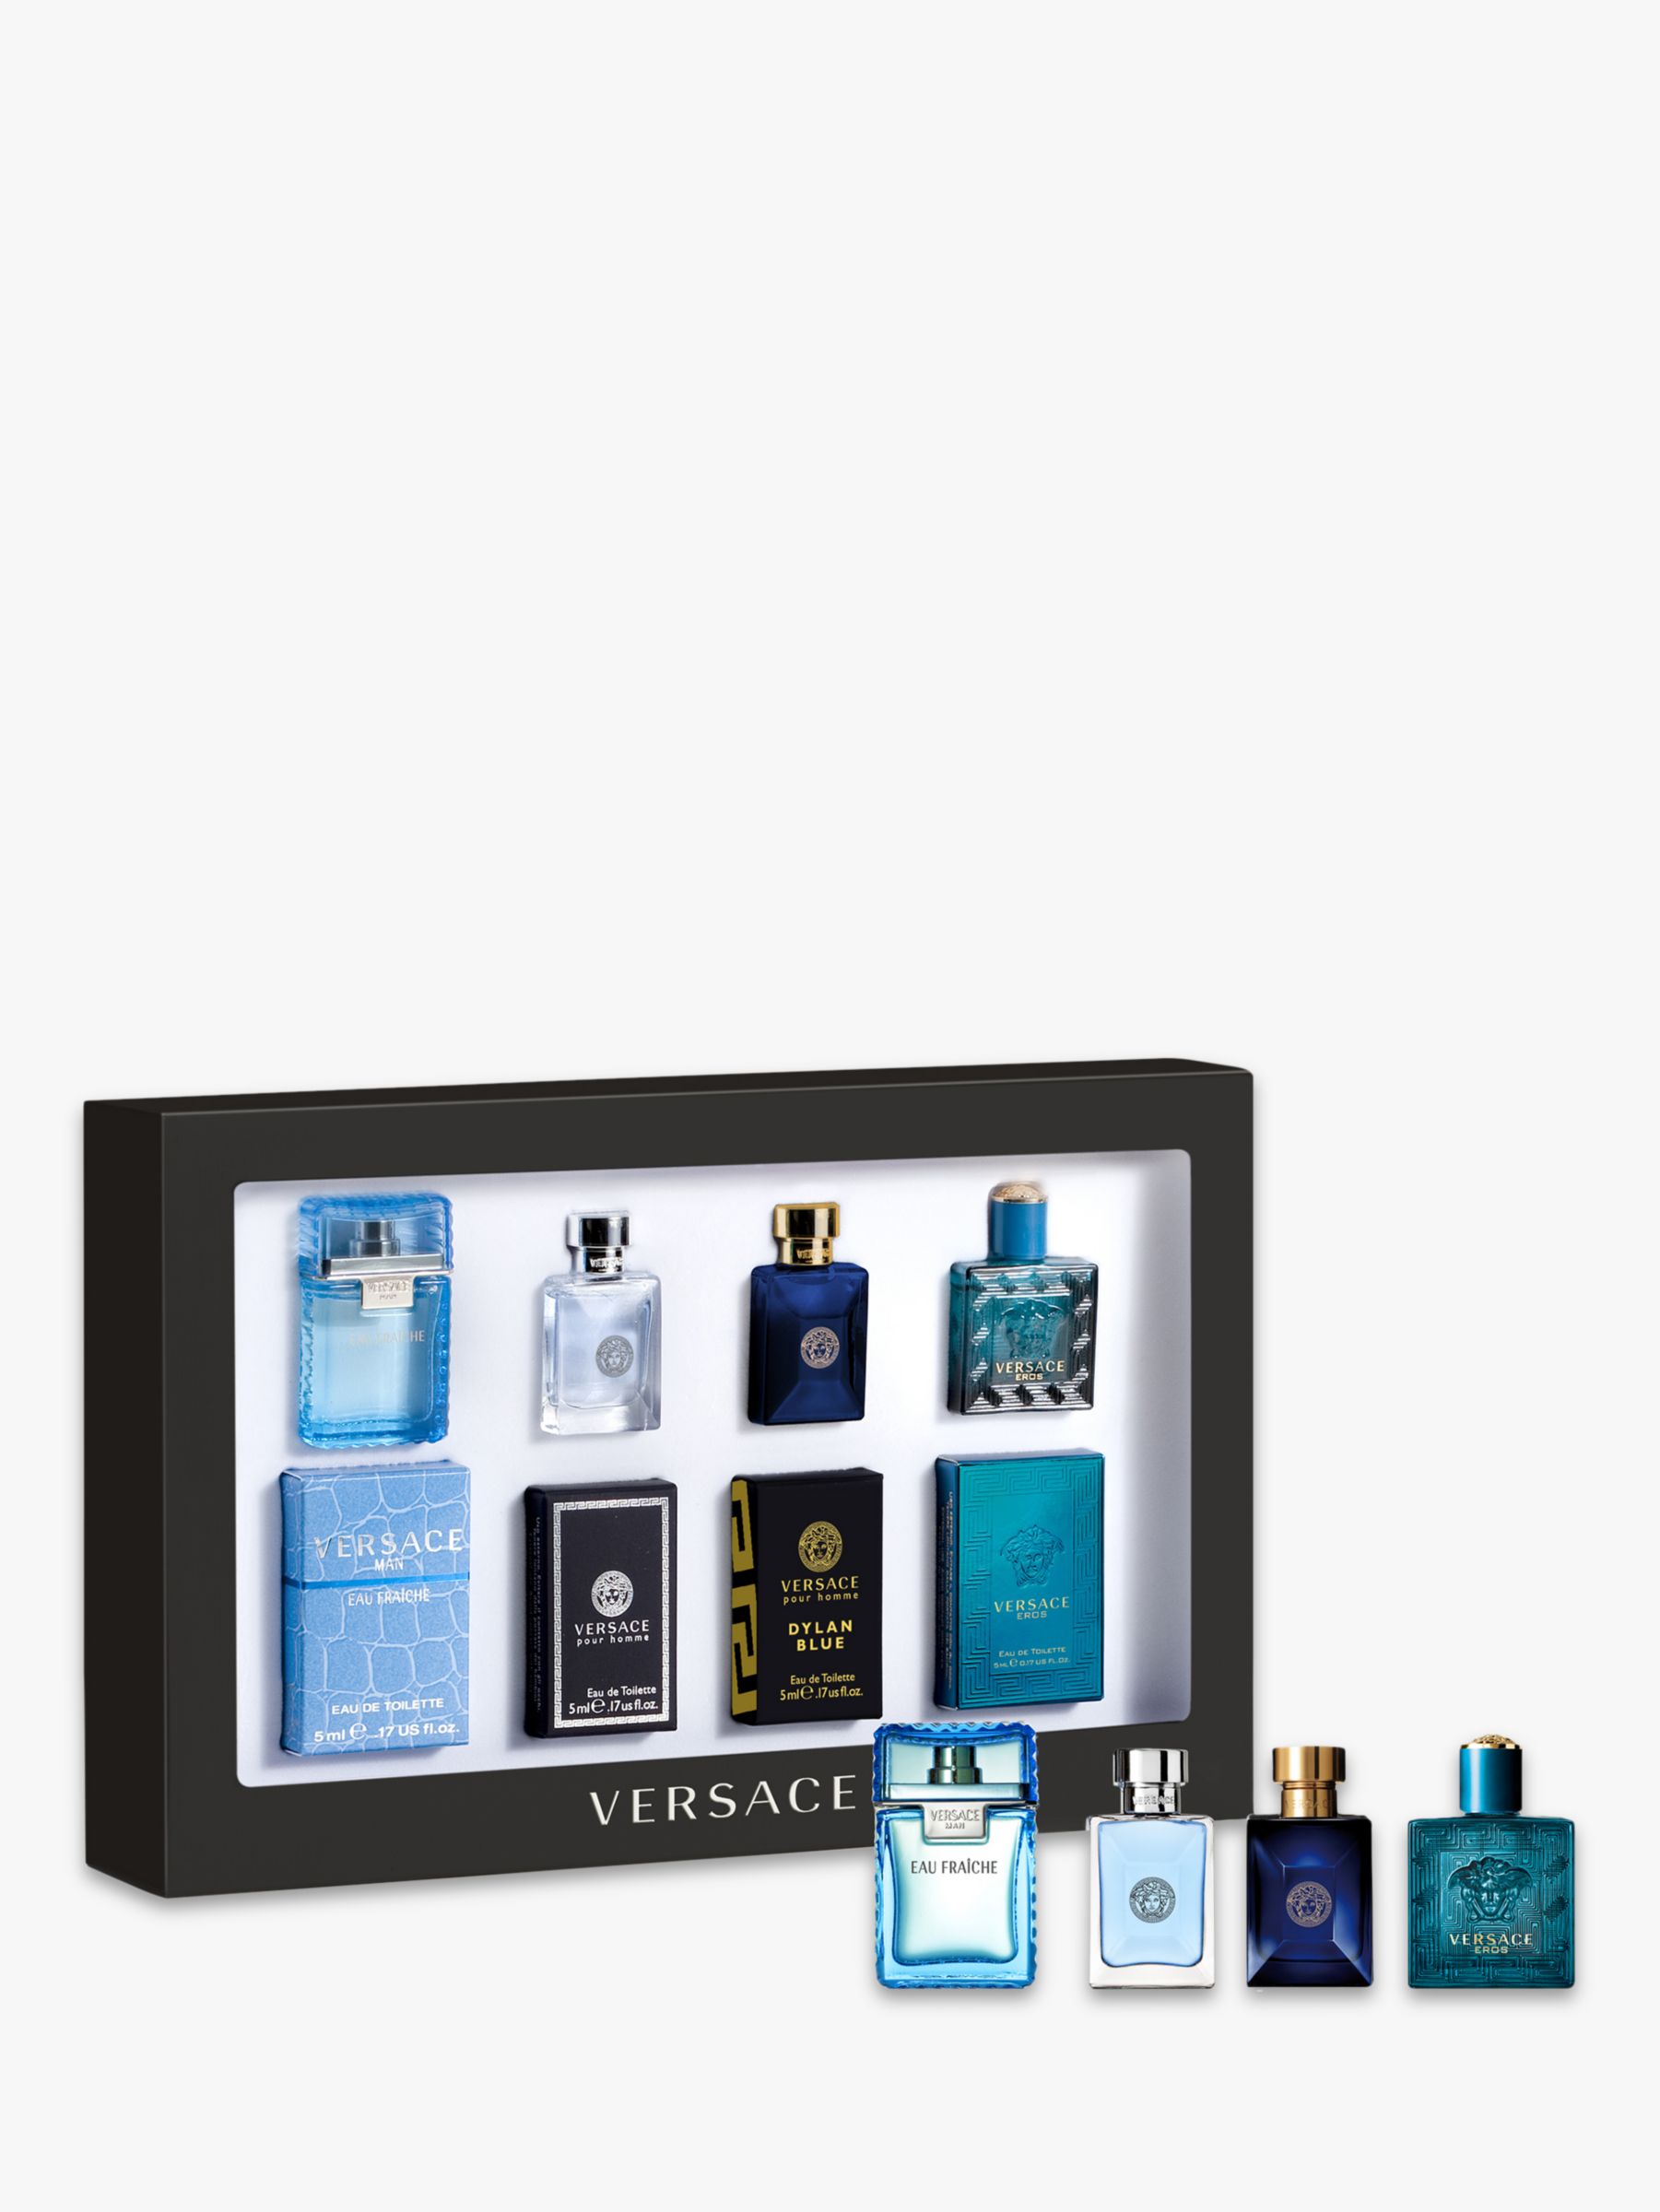 versace men's miniature trio collection 2018